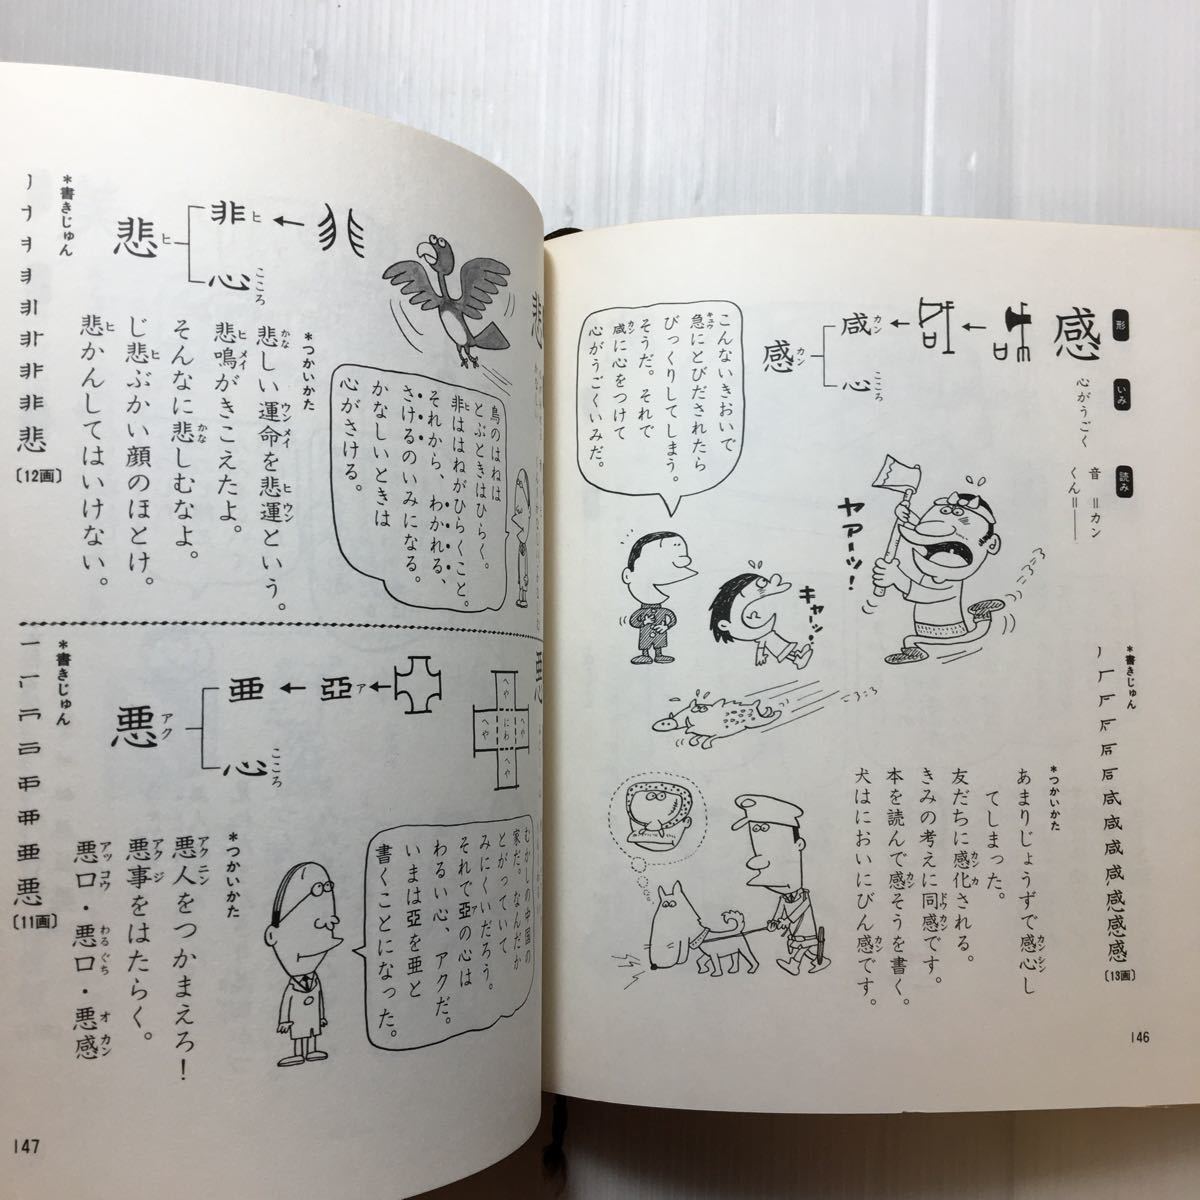 zaa-179♪三年生のかん字 (たのしい漢字教室) 単行本 1982/6/1　 友野 一 (著)　さ・え・ら書房